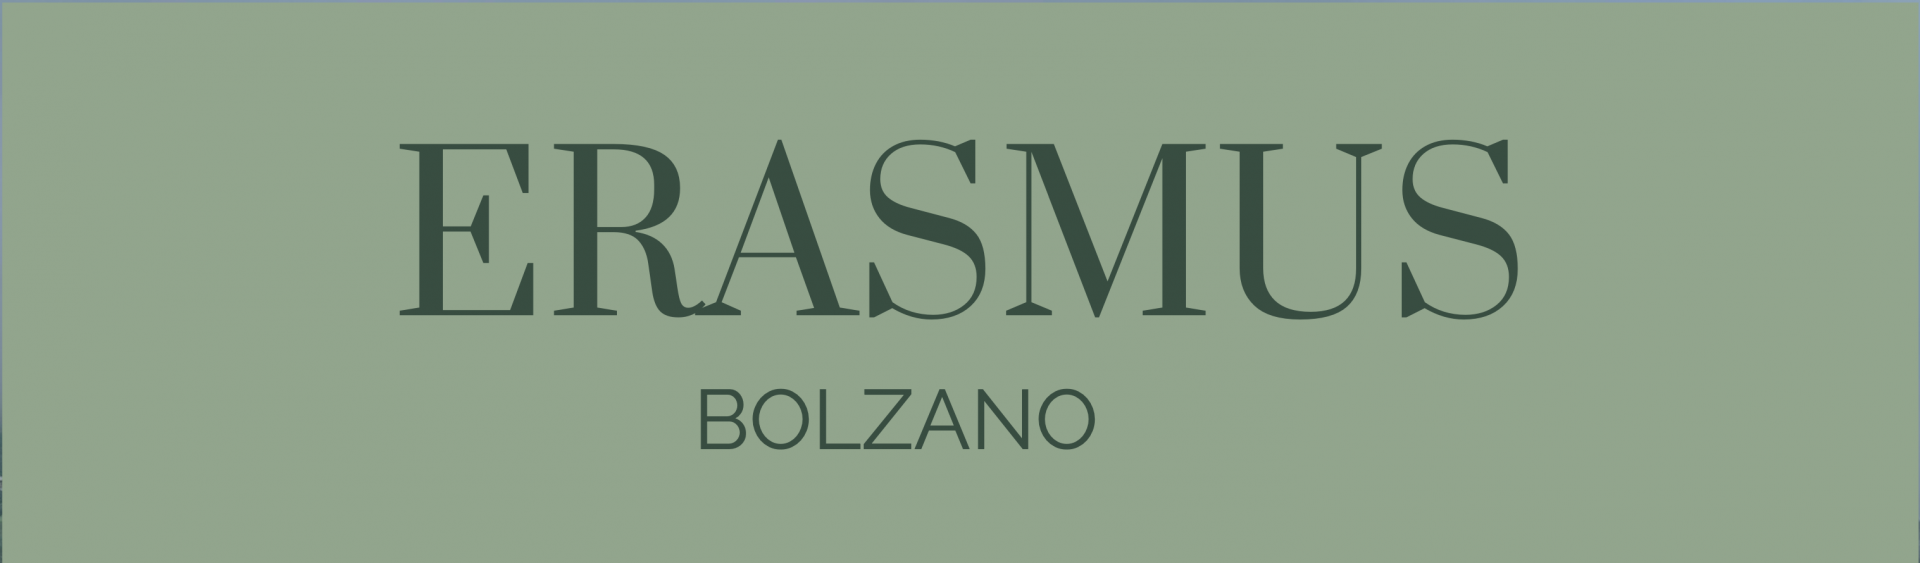 Erasmus Bolzano